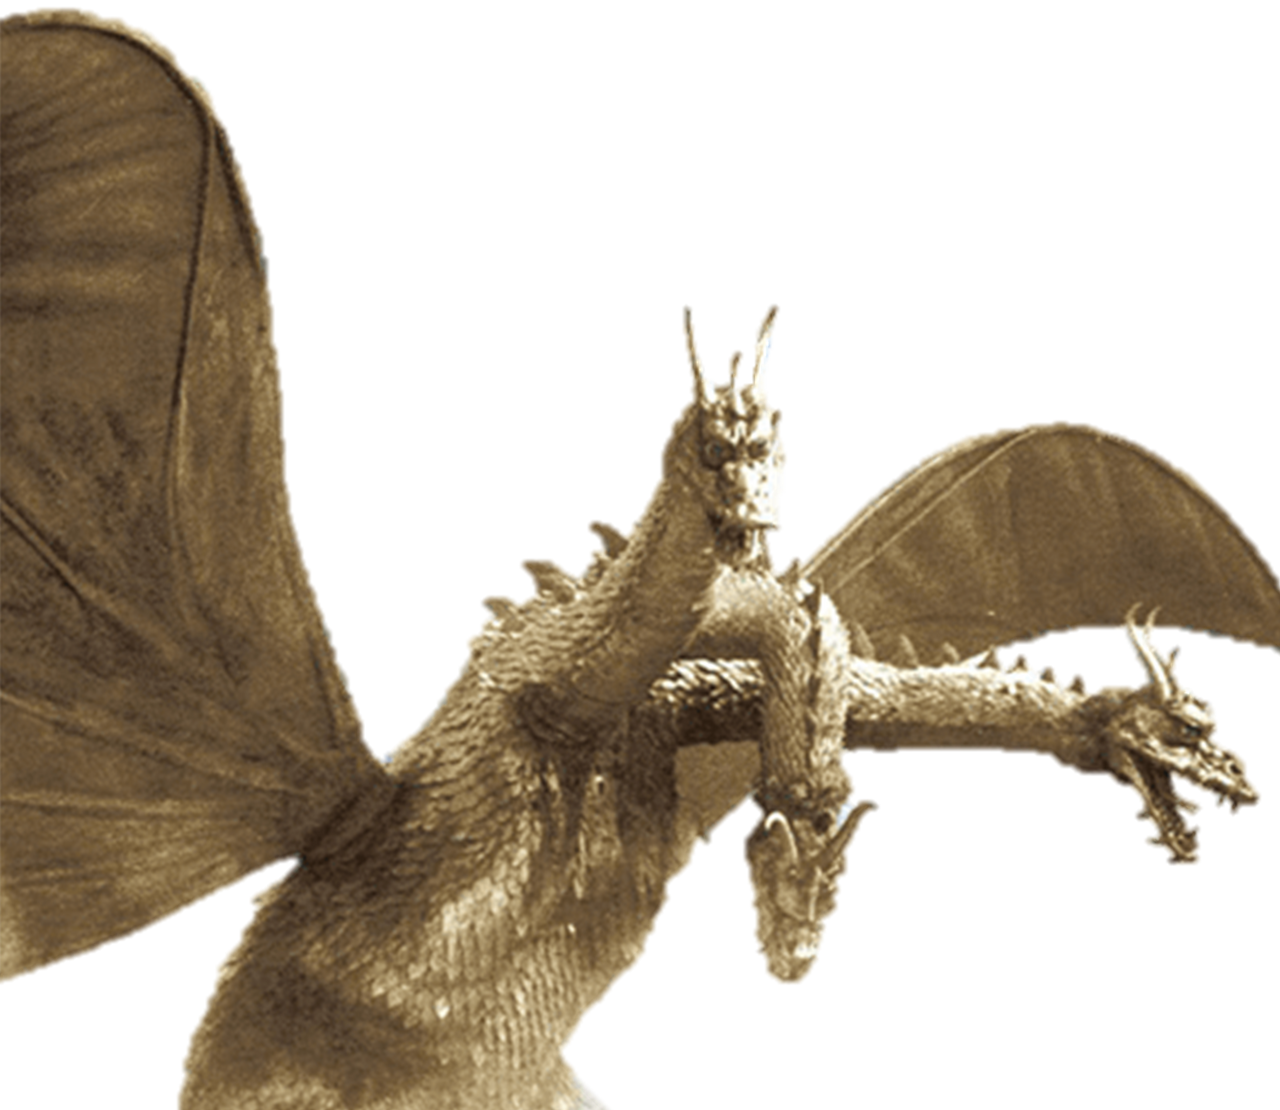 Godzilla Earth Vs King Ghidorah by Lincolnlover1865 on DeviantArt